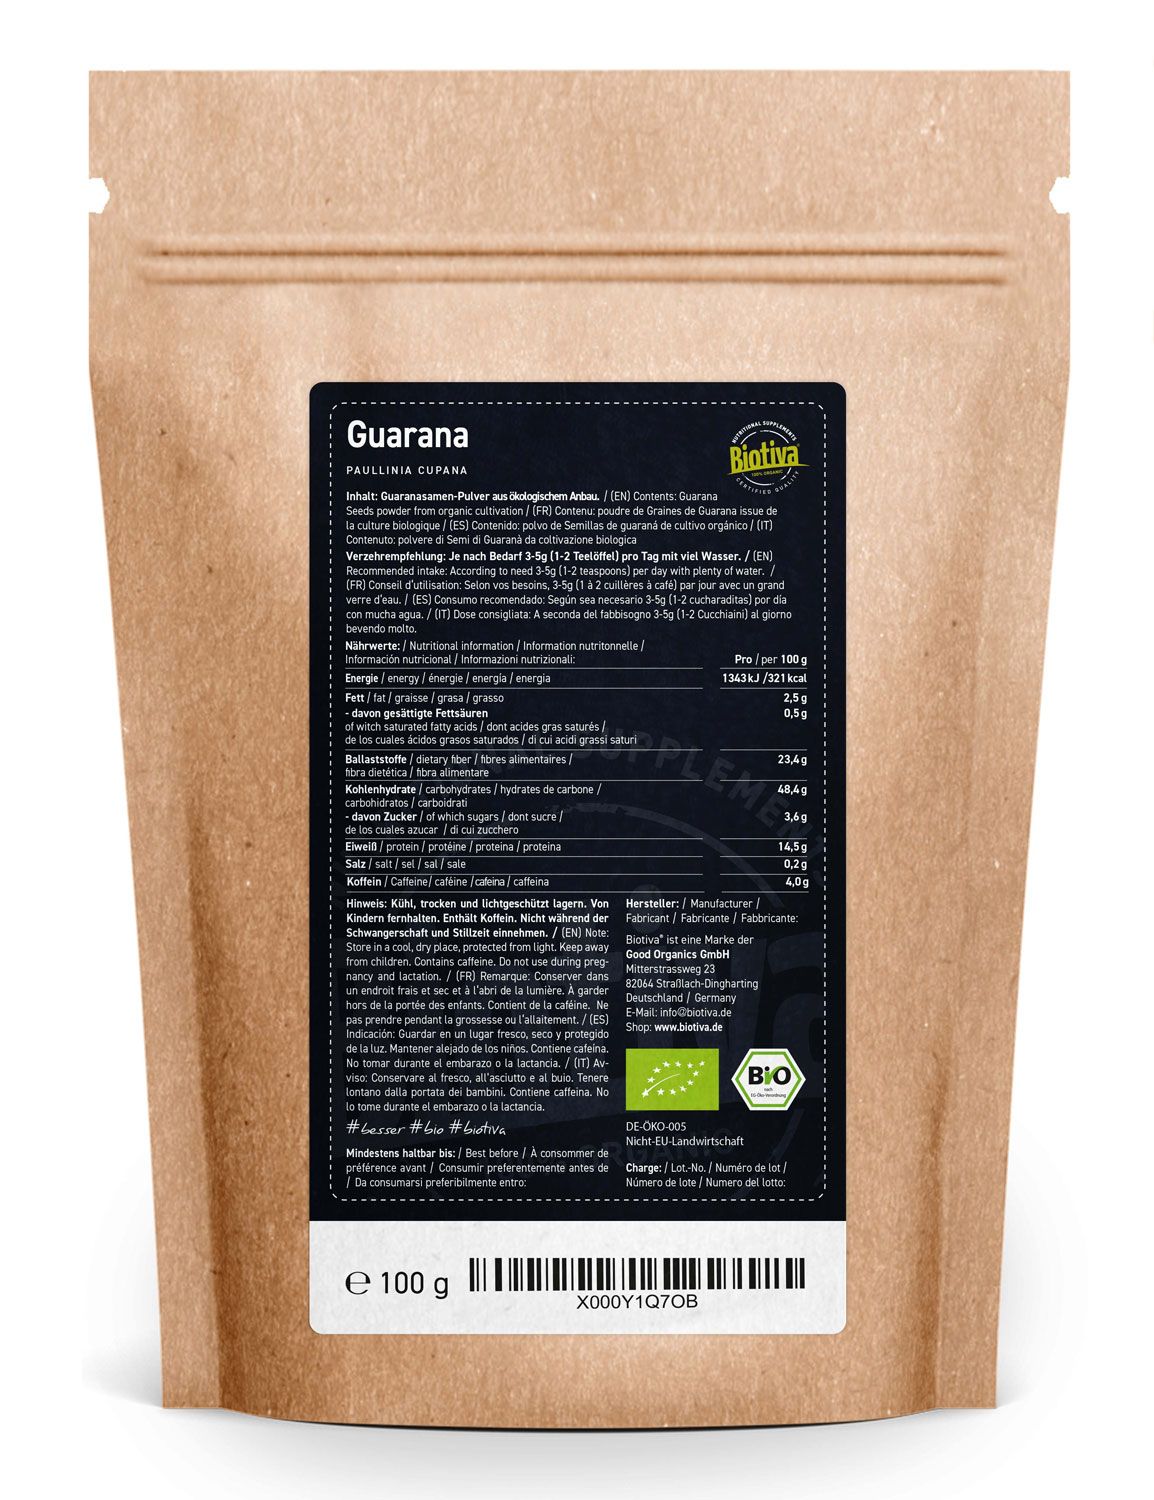 Biotiva Guarana Pulver Bio